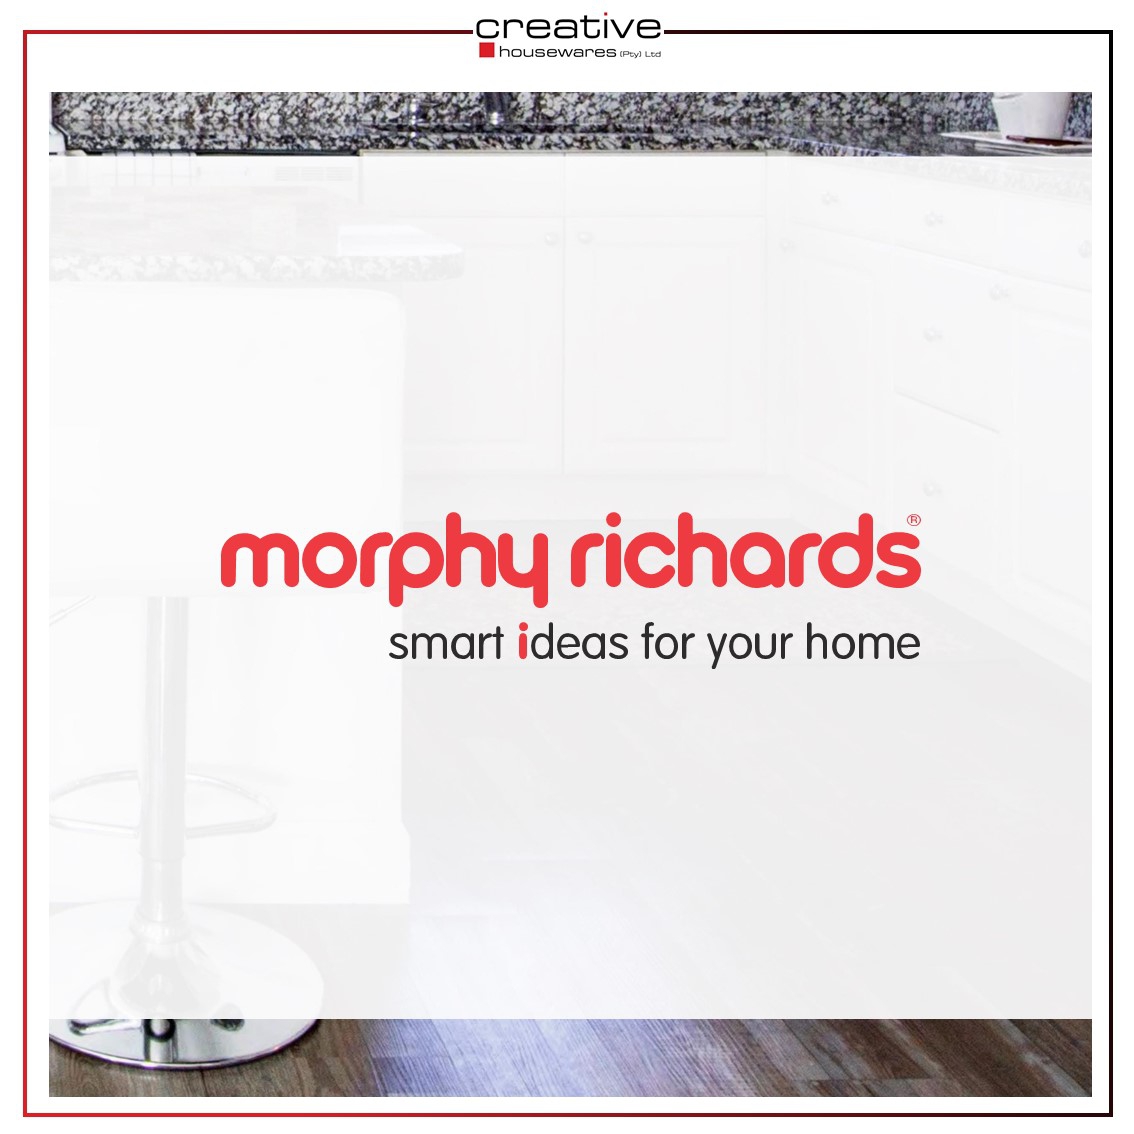 Creative Housewares - Morphy Richards 2021 Catalogue Catalogue